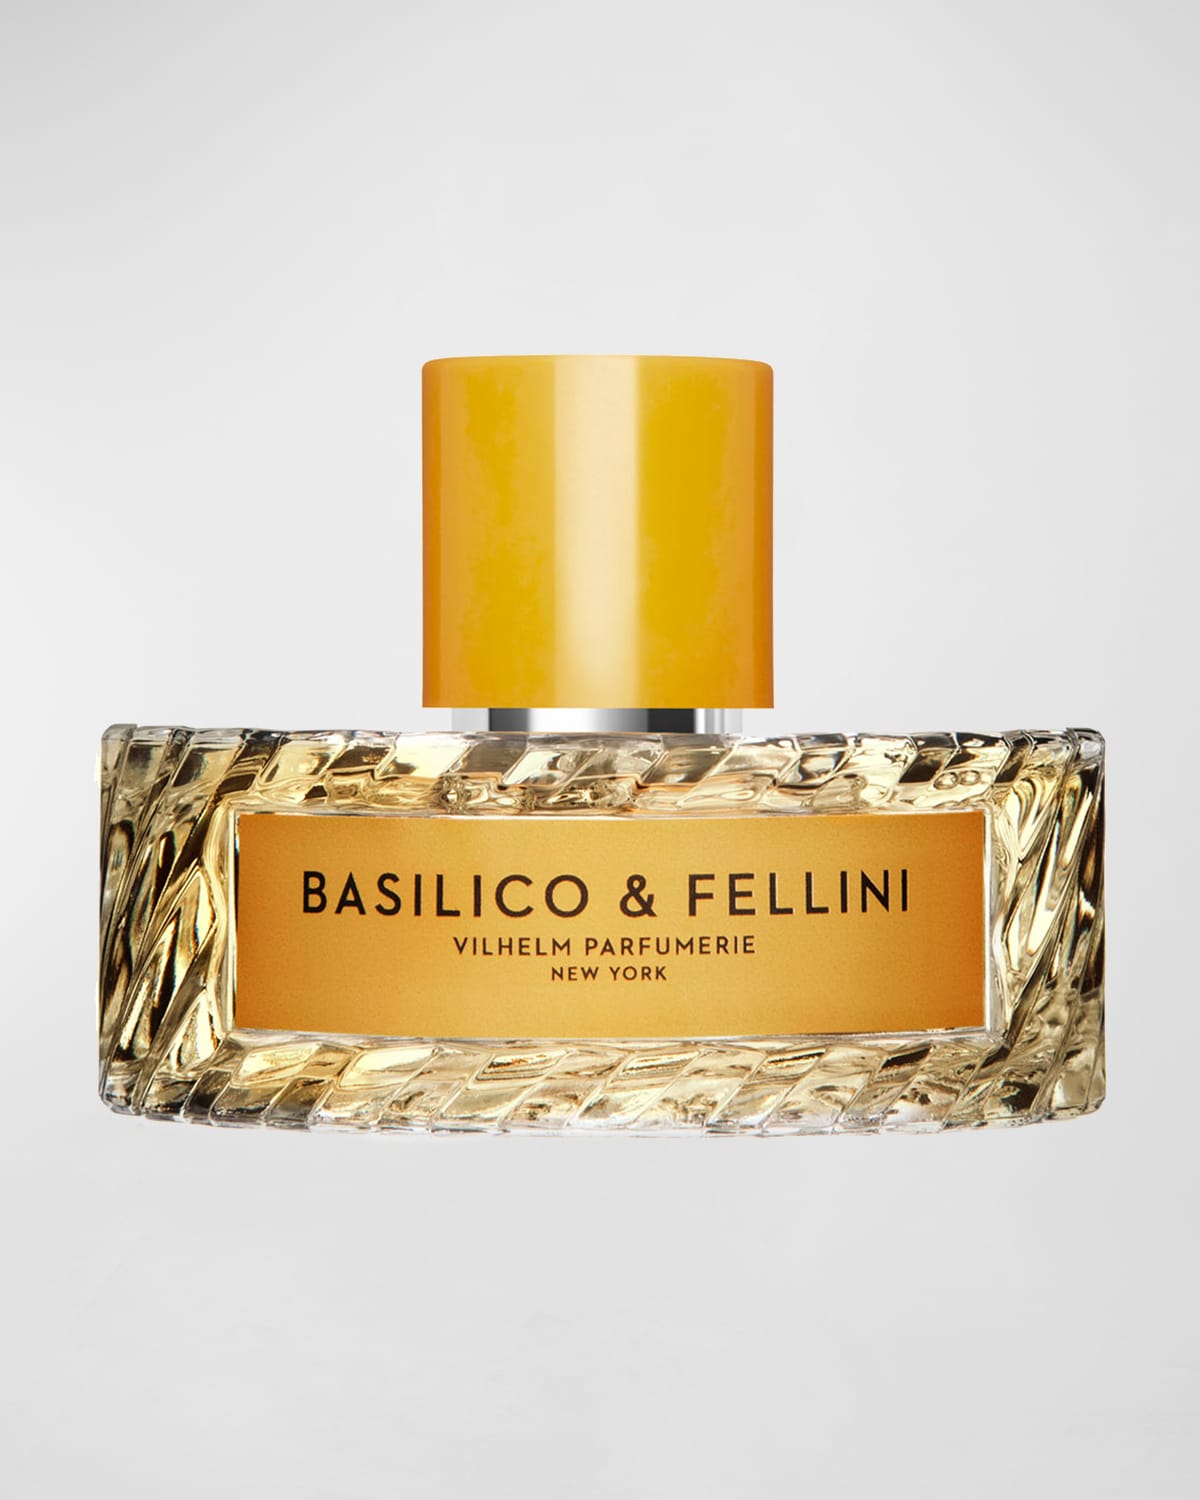 Basilico & Fellini Eau de Parfum, 3.4 oz.